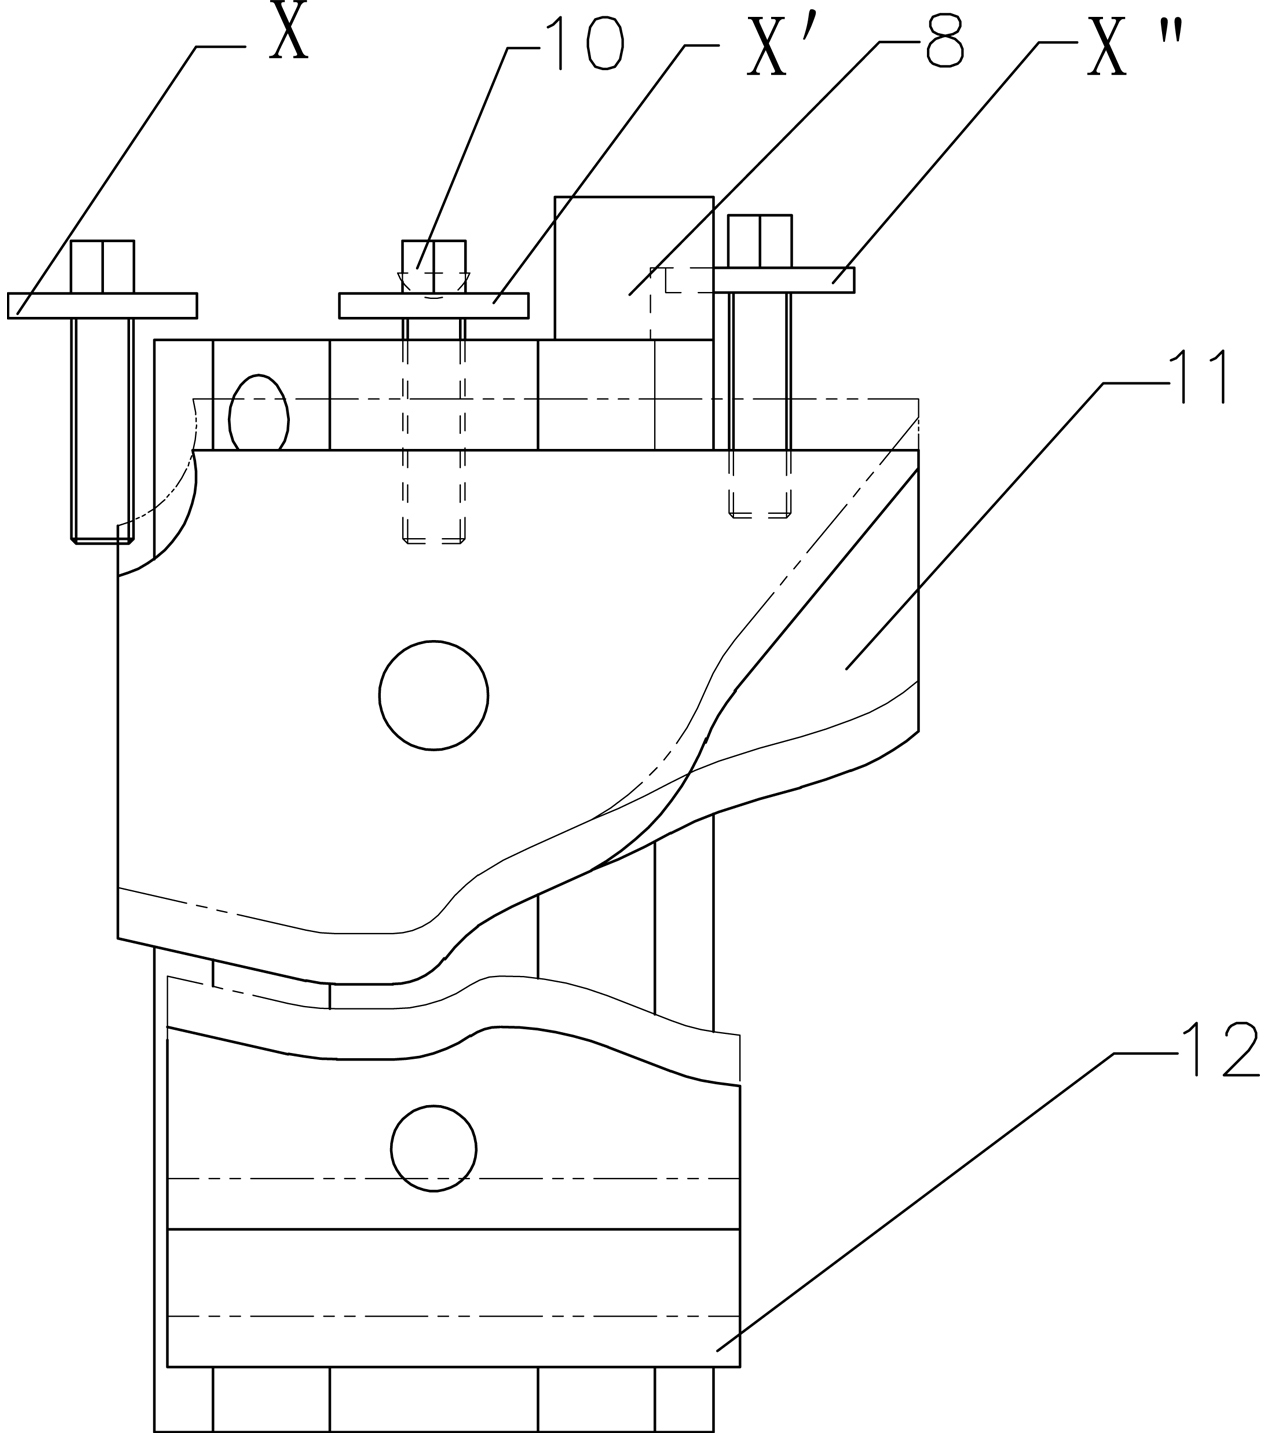 Density adjusting device of computer silk stockings machine